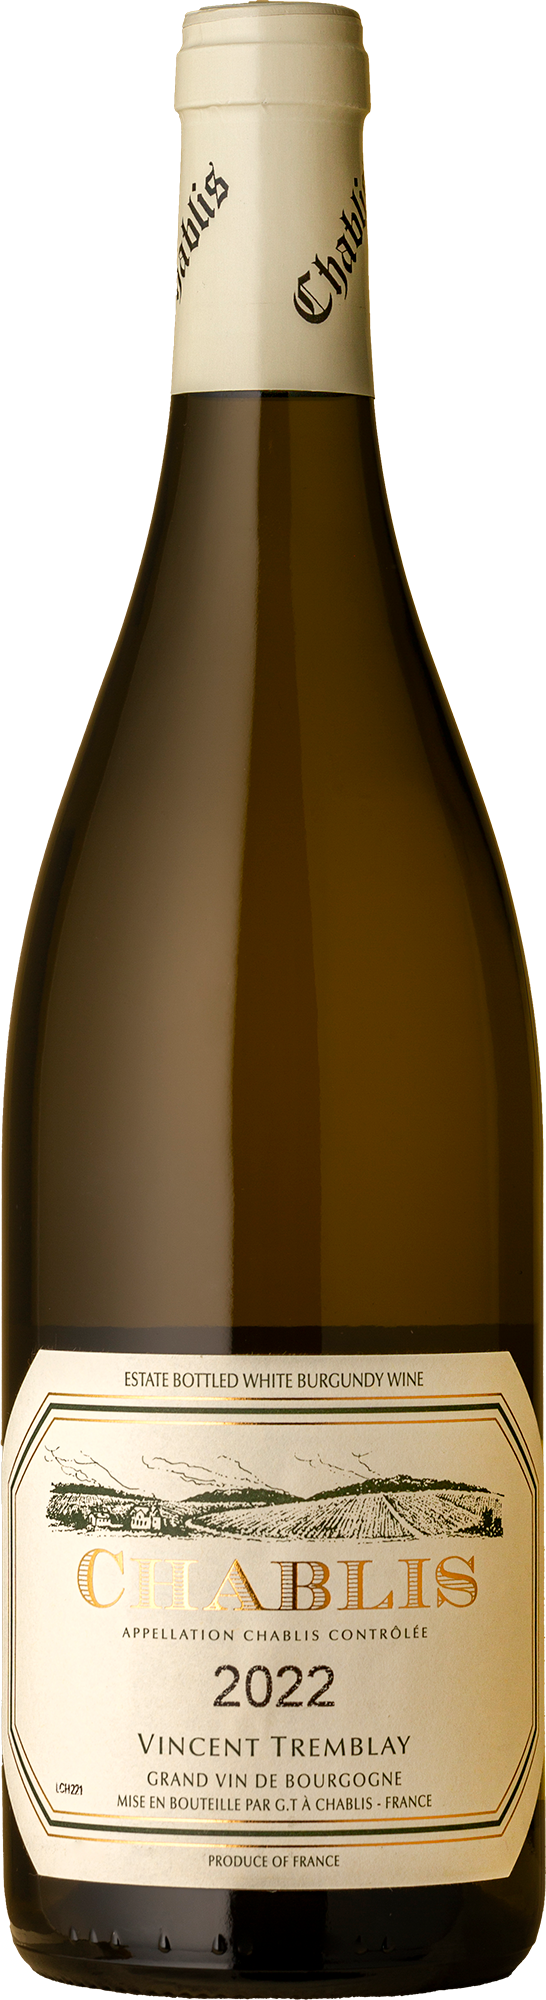 Domaine Vincent Tremblay - Chablis Chardonnay 2022 White Wine